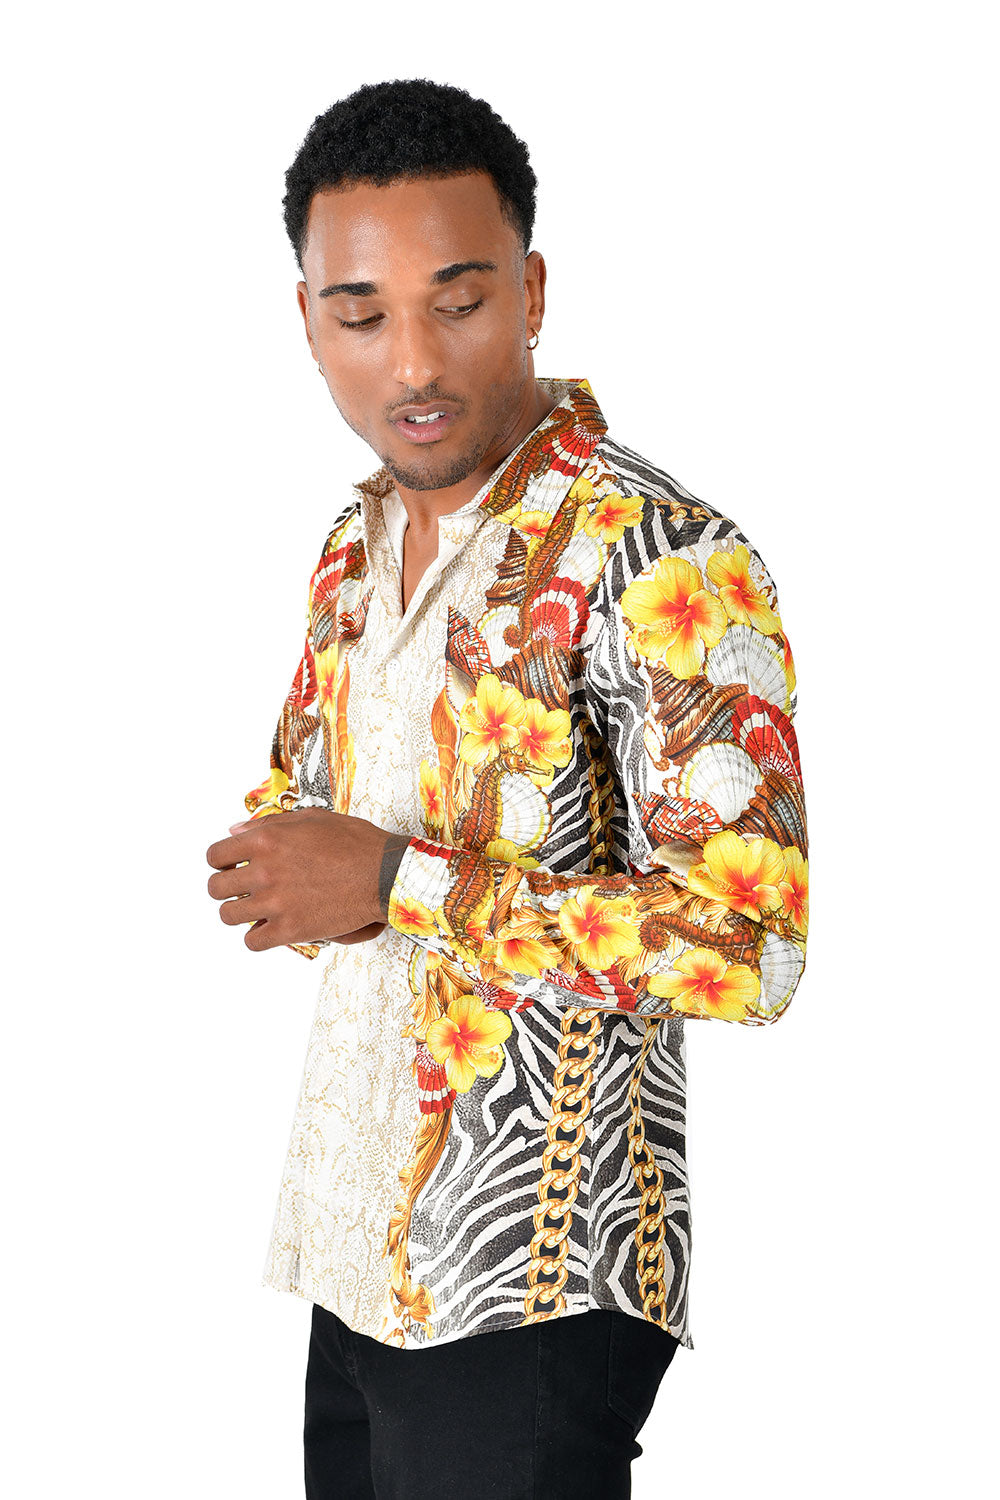 BARABAS men's Sea Horse Shell Floral Print long sleeve shirts SP251